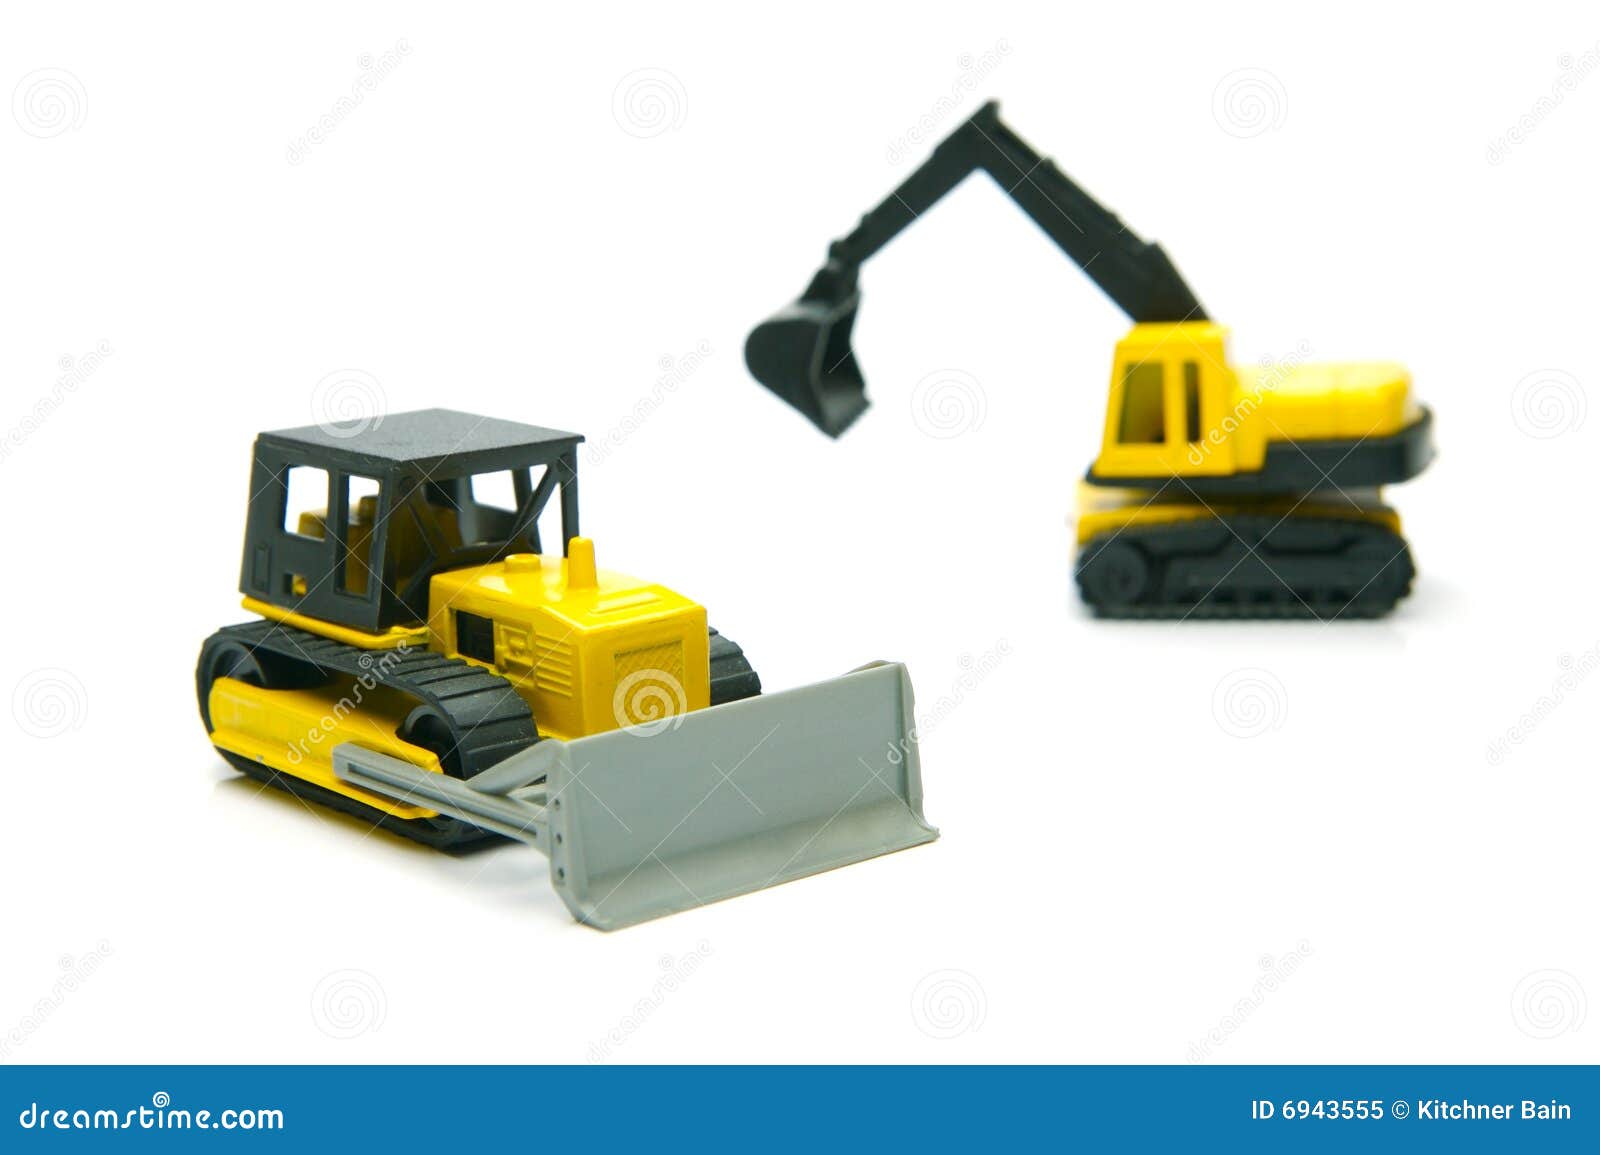 Miniature Construction Toys 26